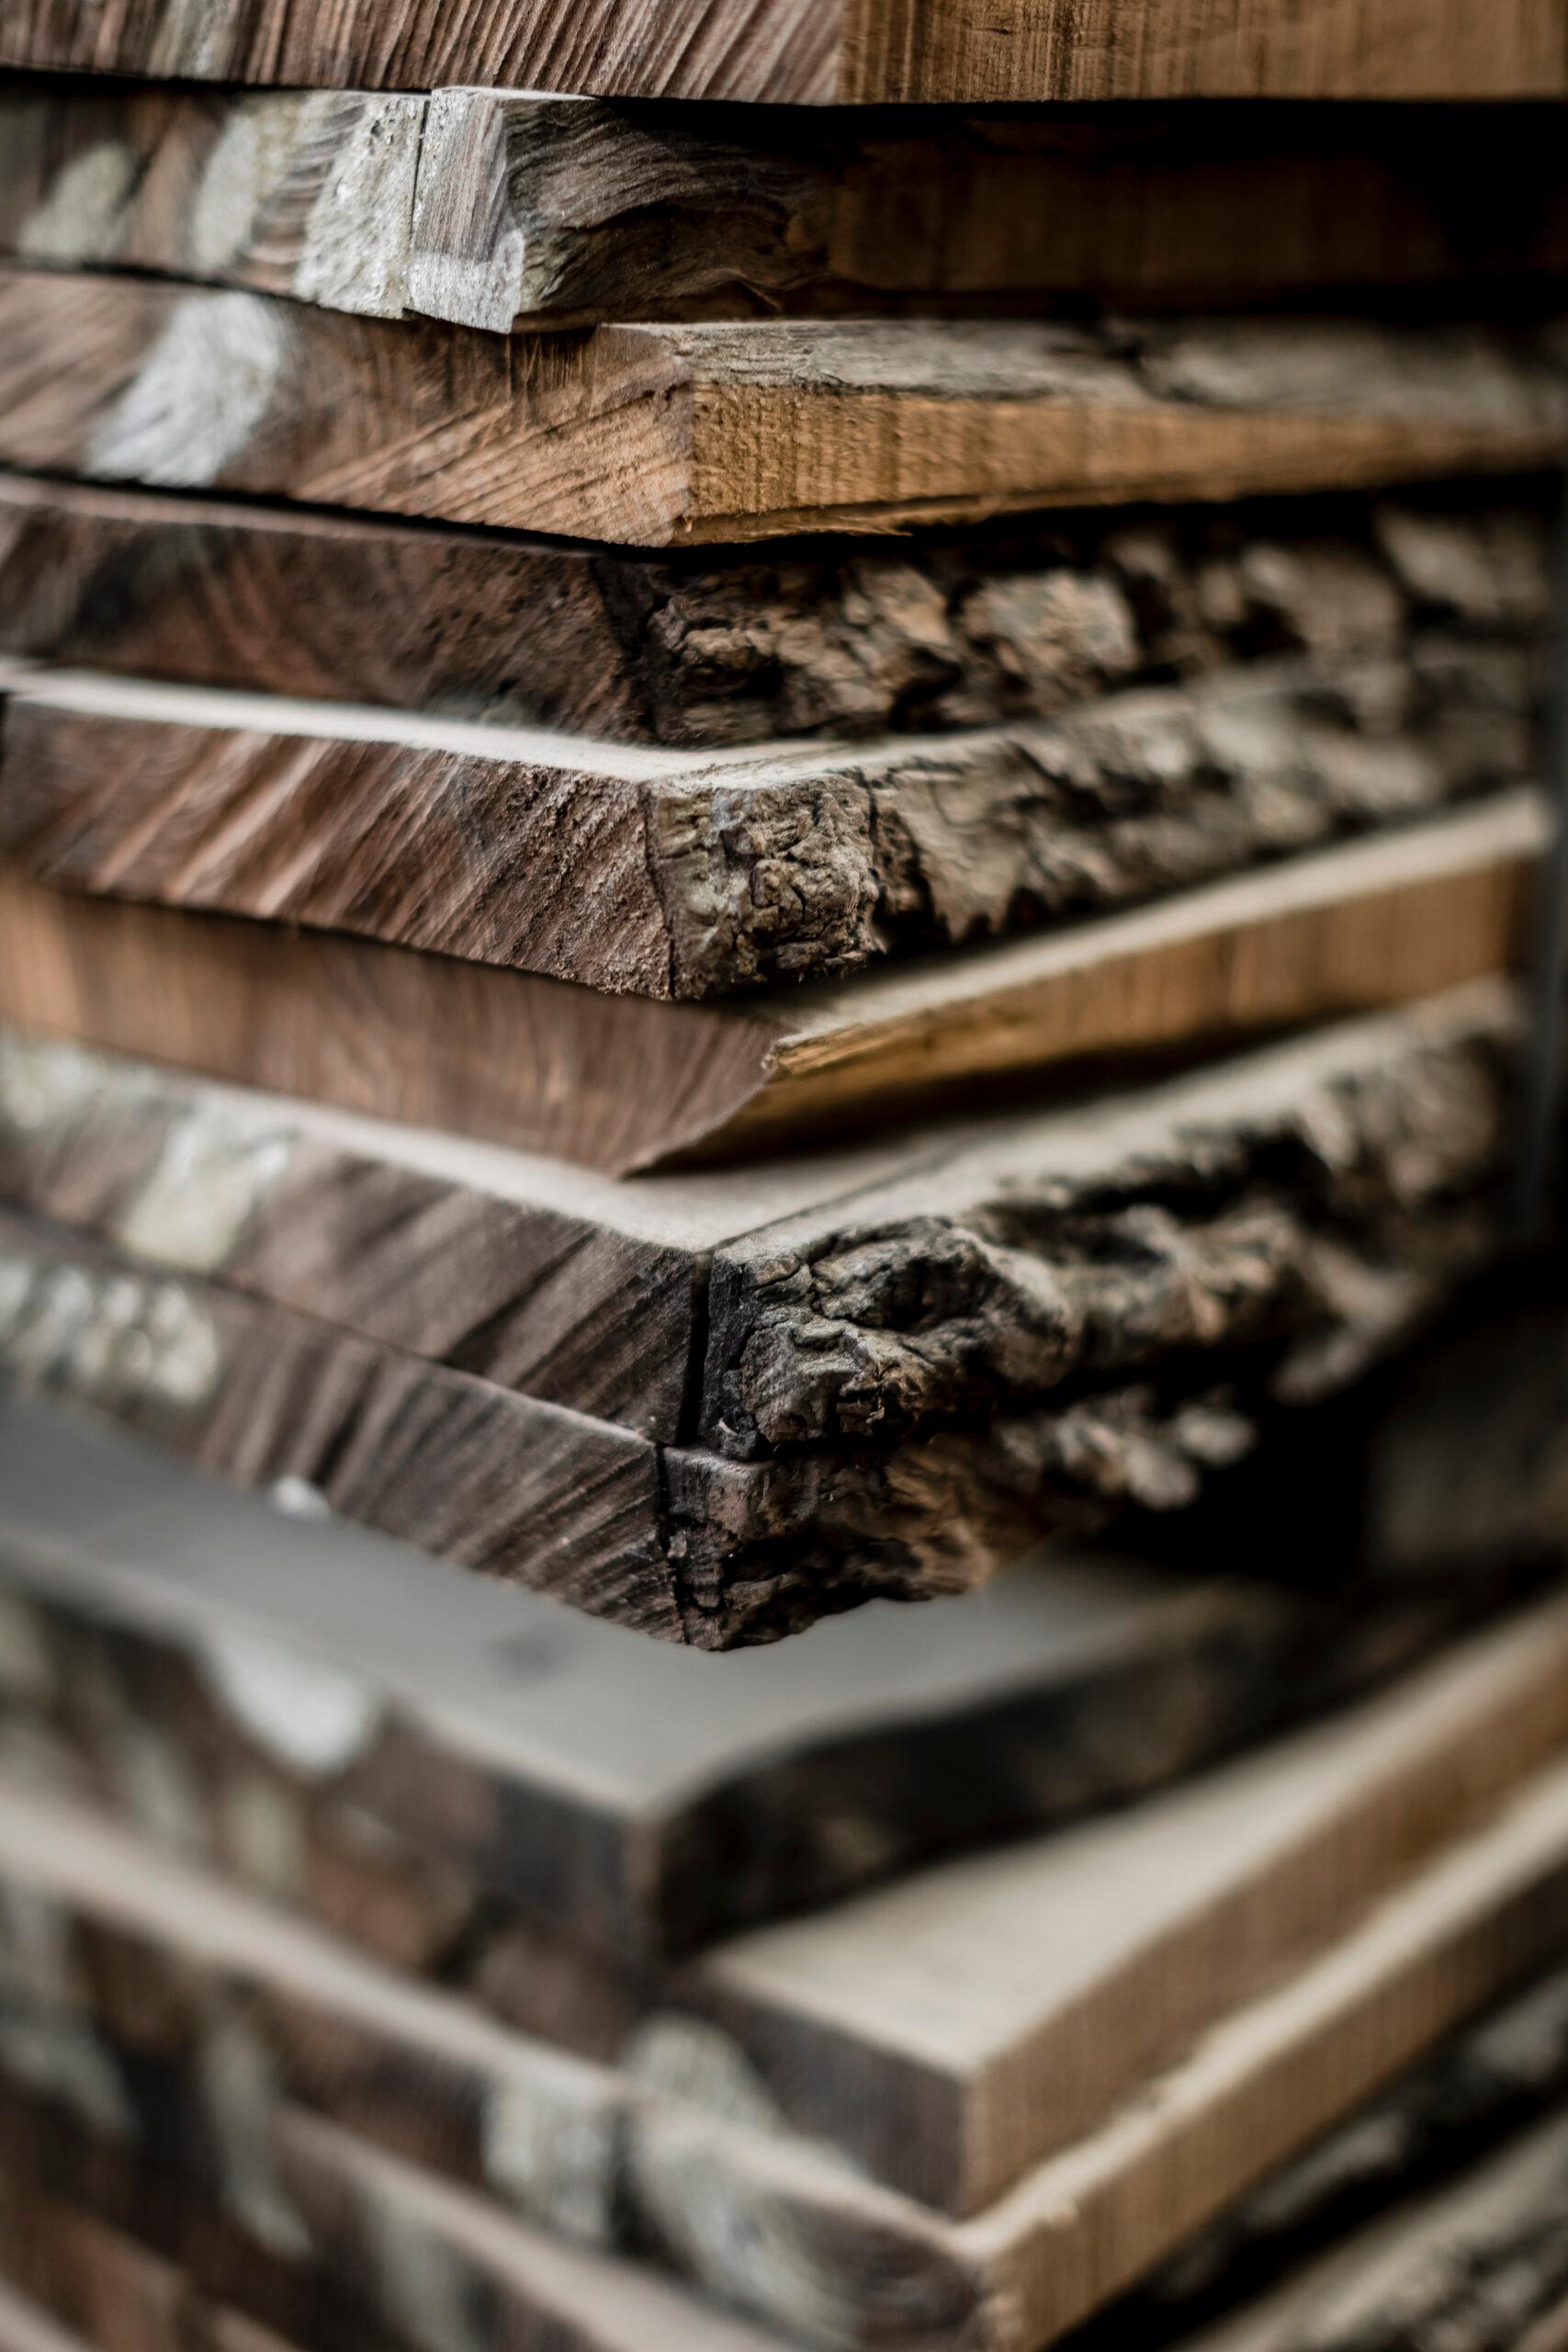 Sonus Faber responds to increased demand by acquiring its longtime partner De Santi Woodworking. 2ff6bfd5 sonus faber woodworking9 scaled